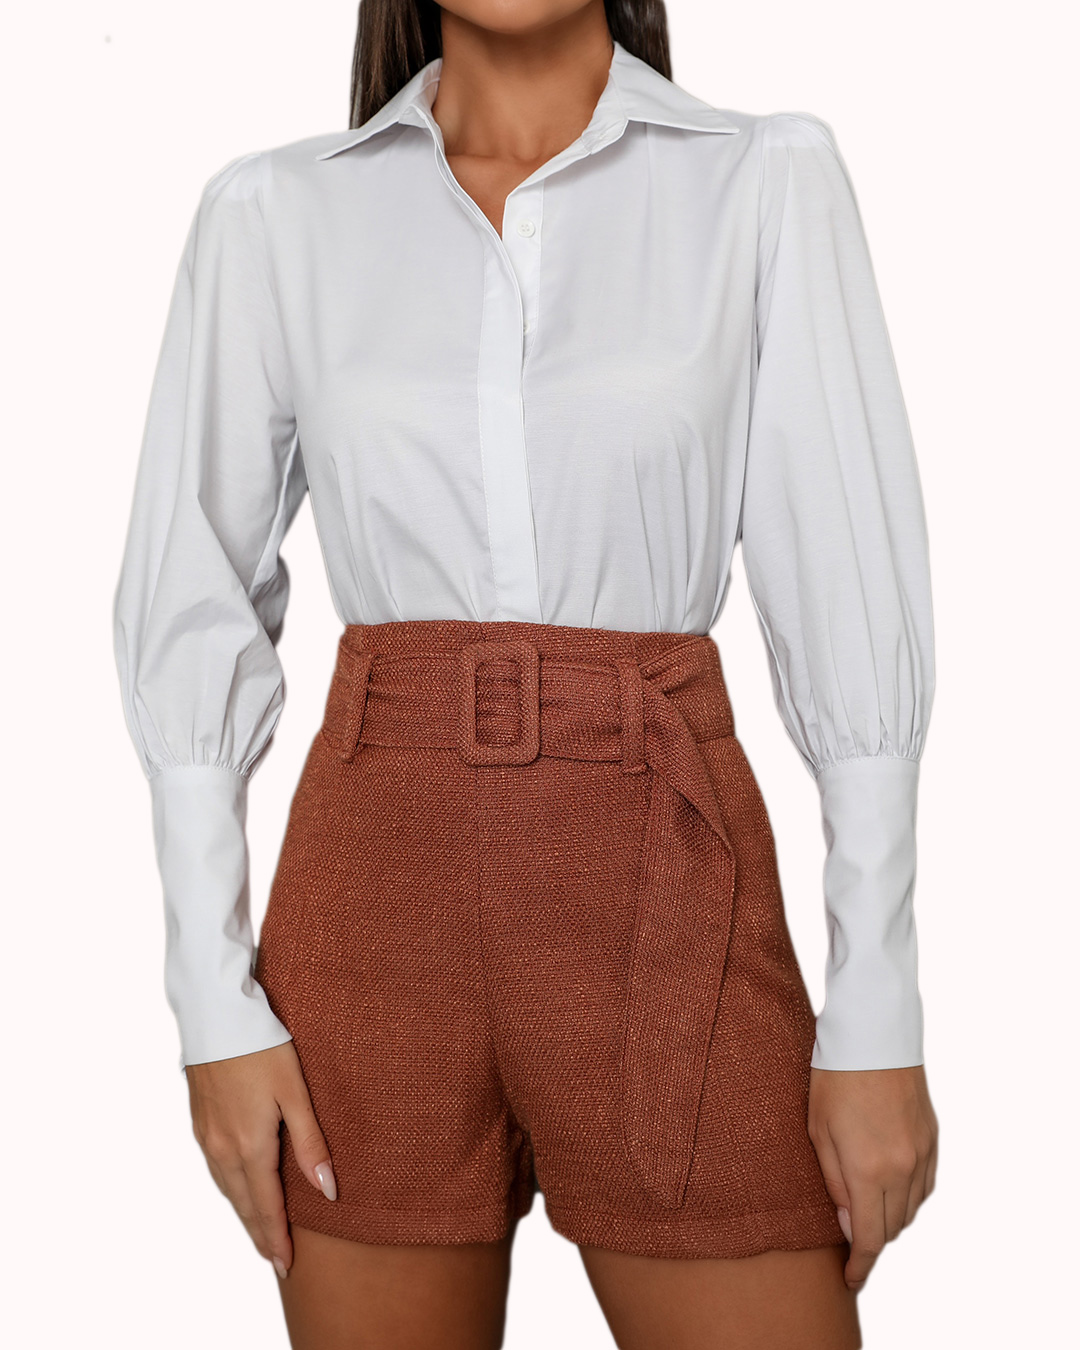 Dot Clothing - High Waist Dot Clothing Shorts Brown - 1607MARR